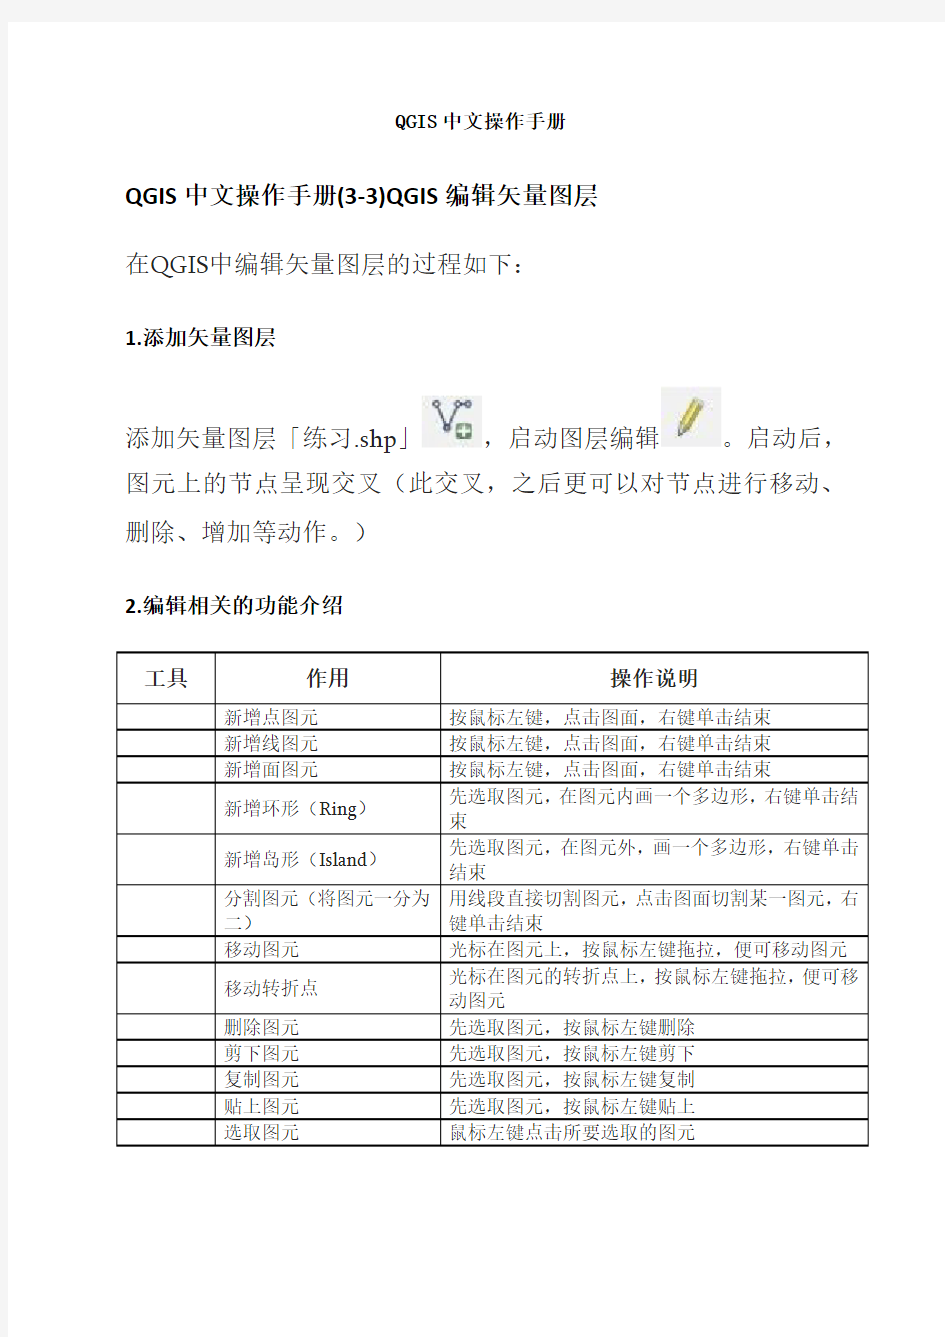 QGIS中文操作手册